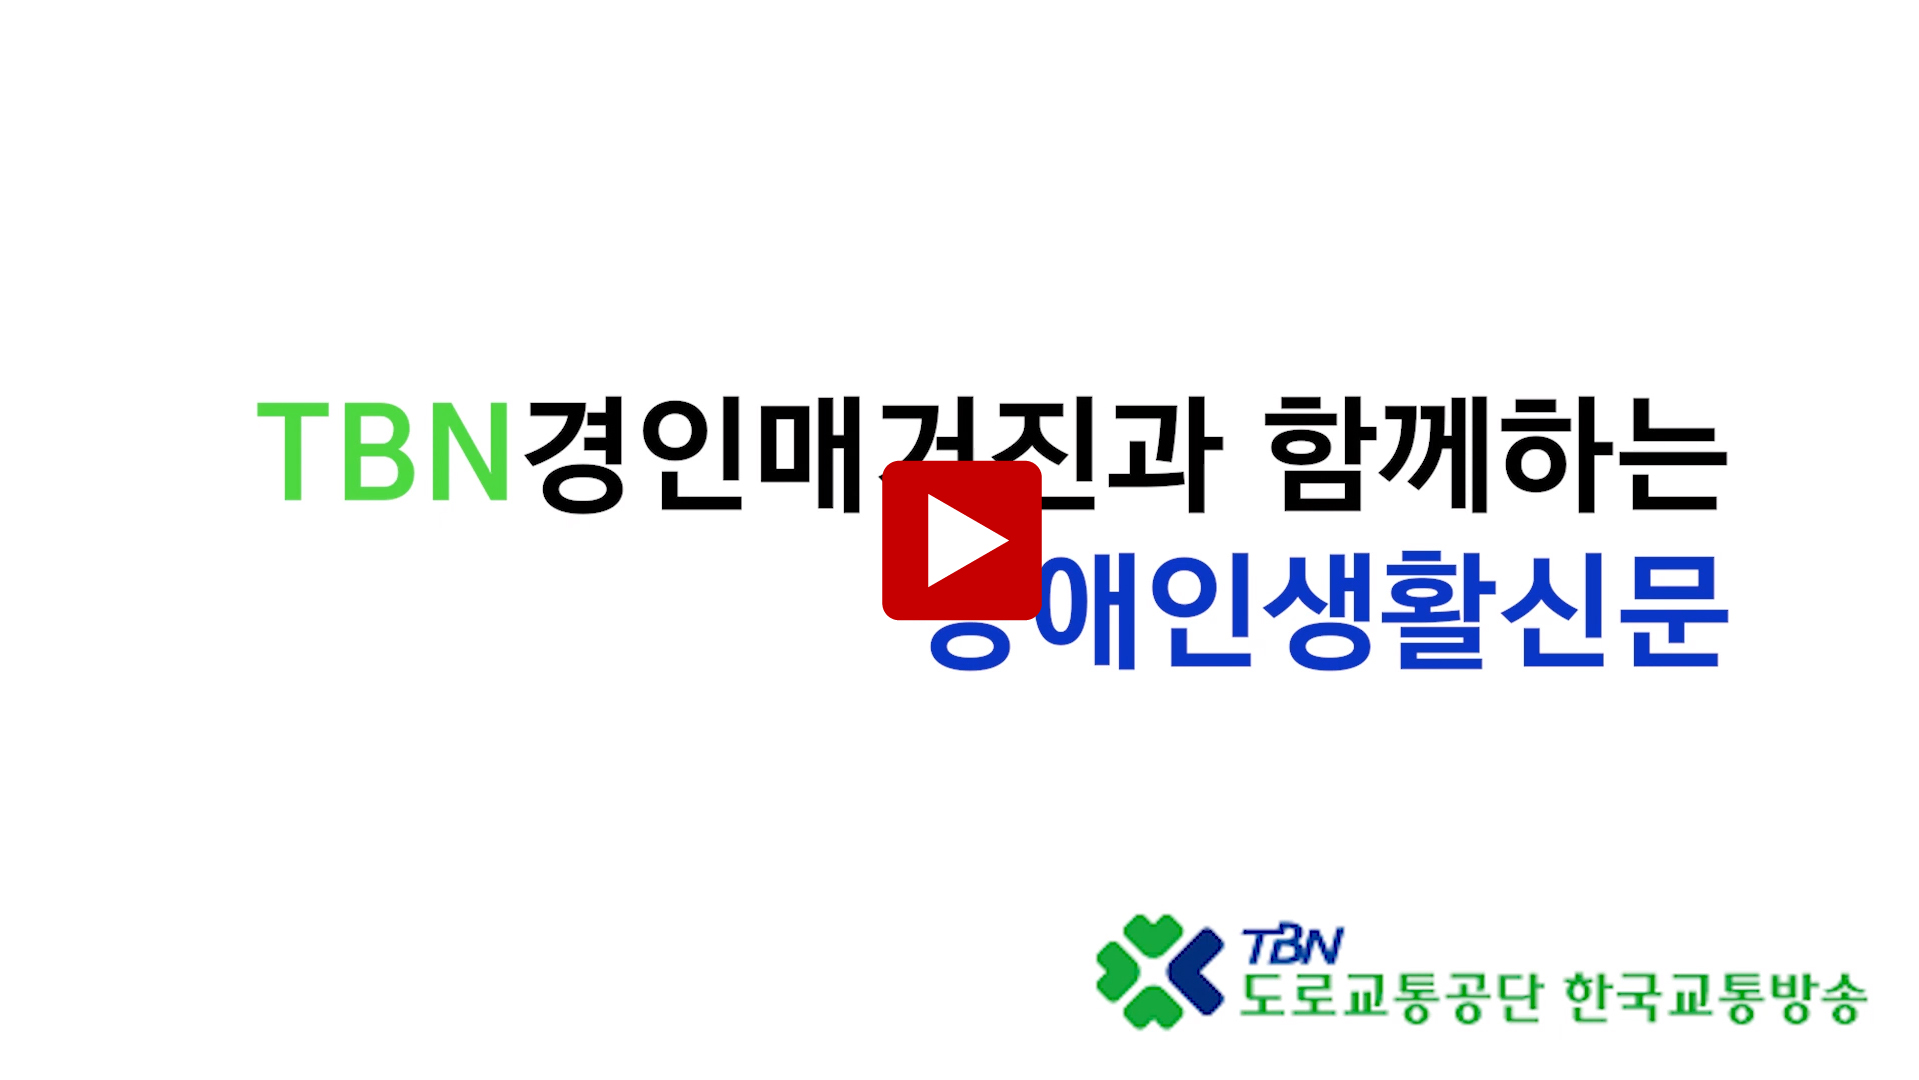 TBN경인매거진과 함께하는 장애인생활신문 -2022년 5월 18일 방송